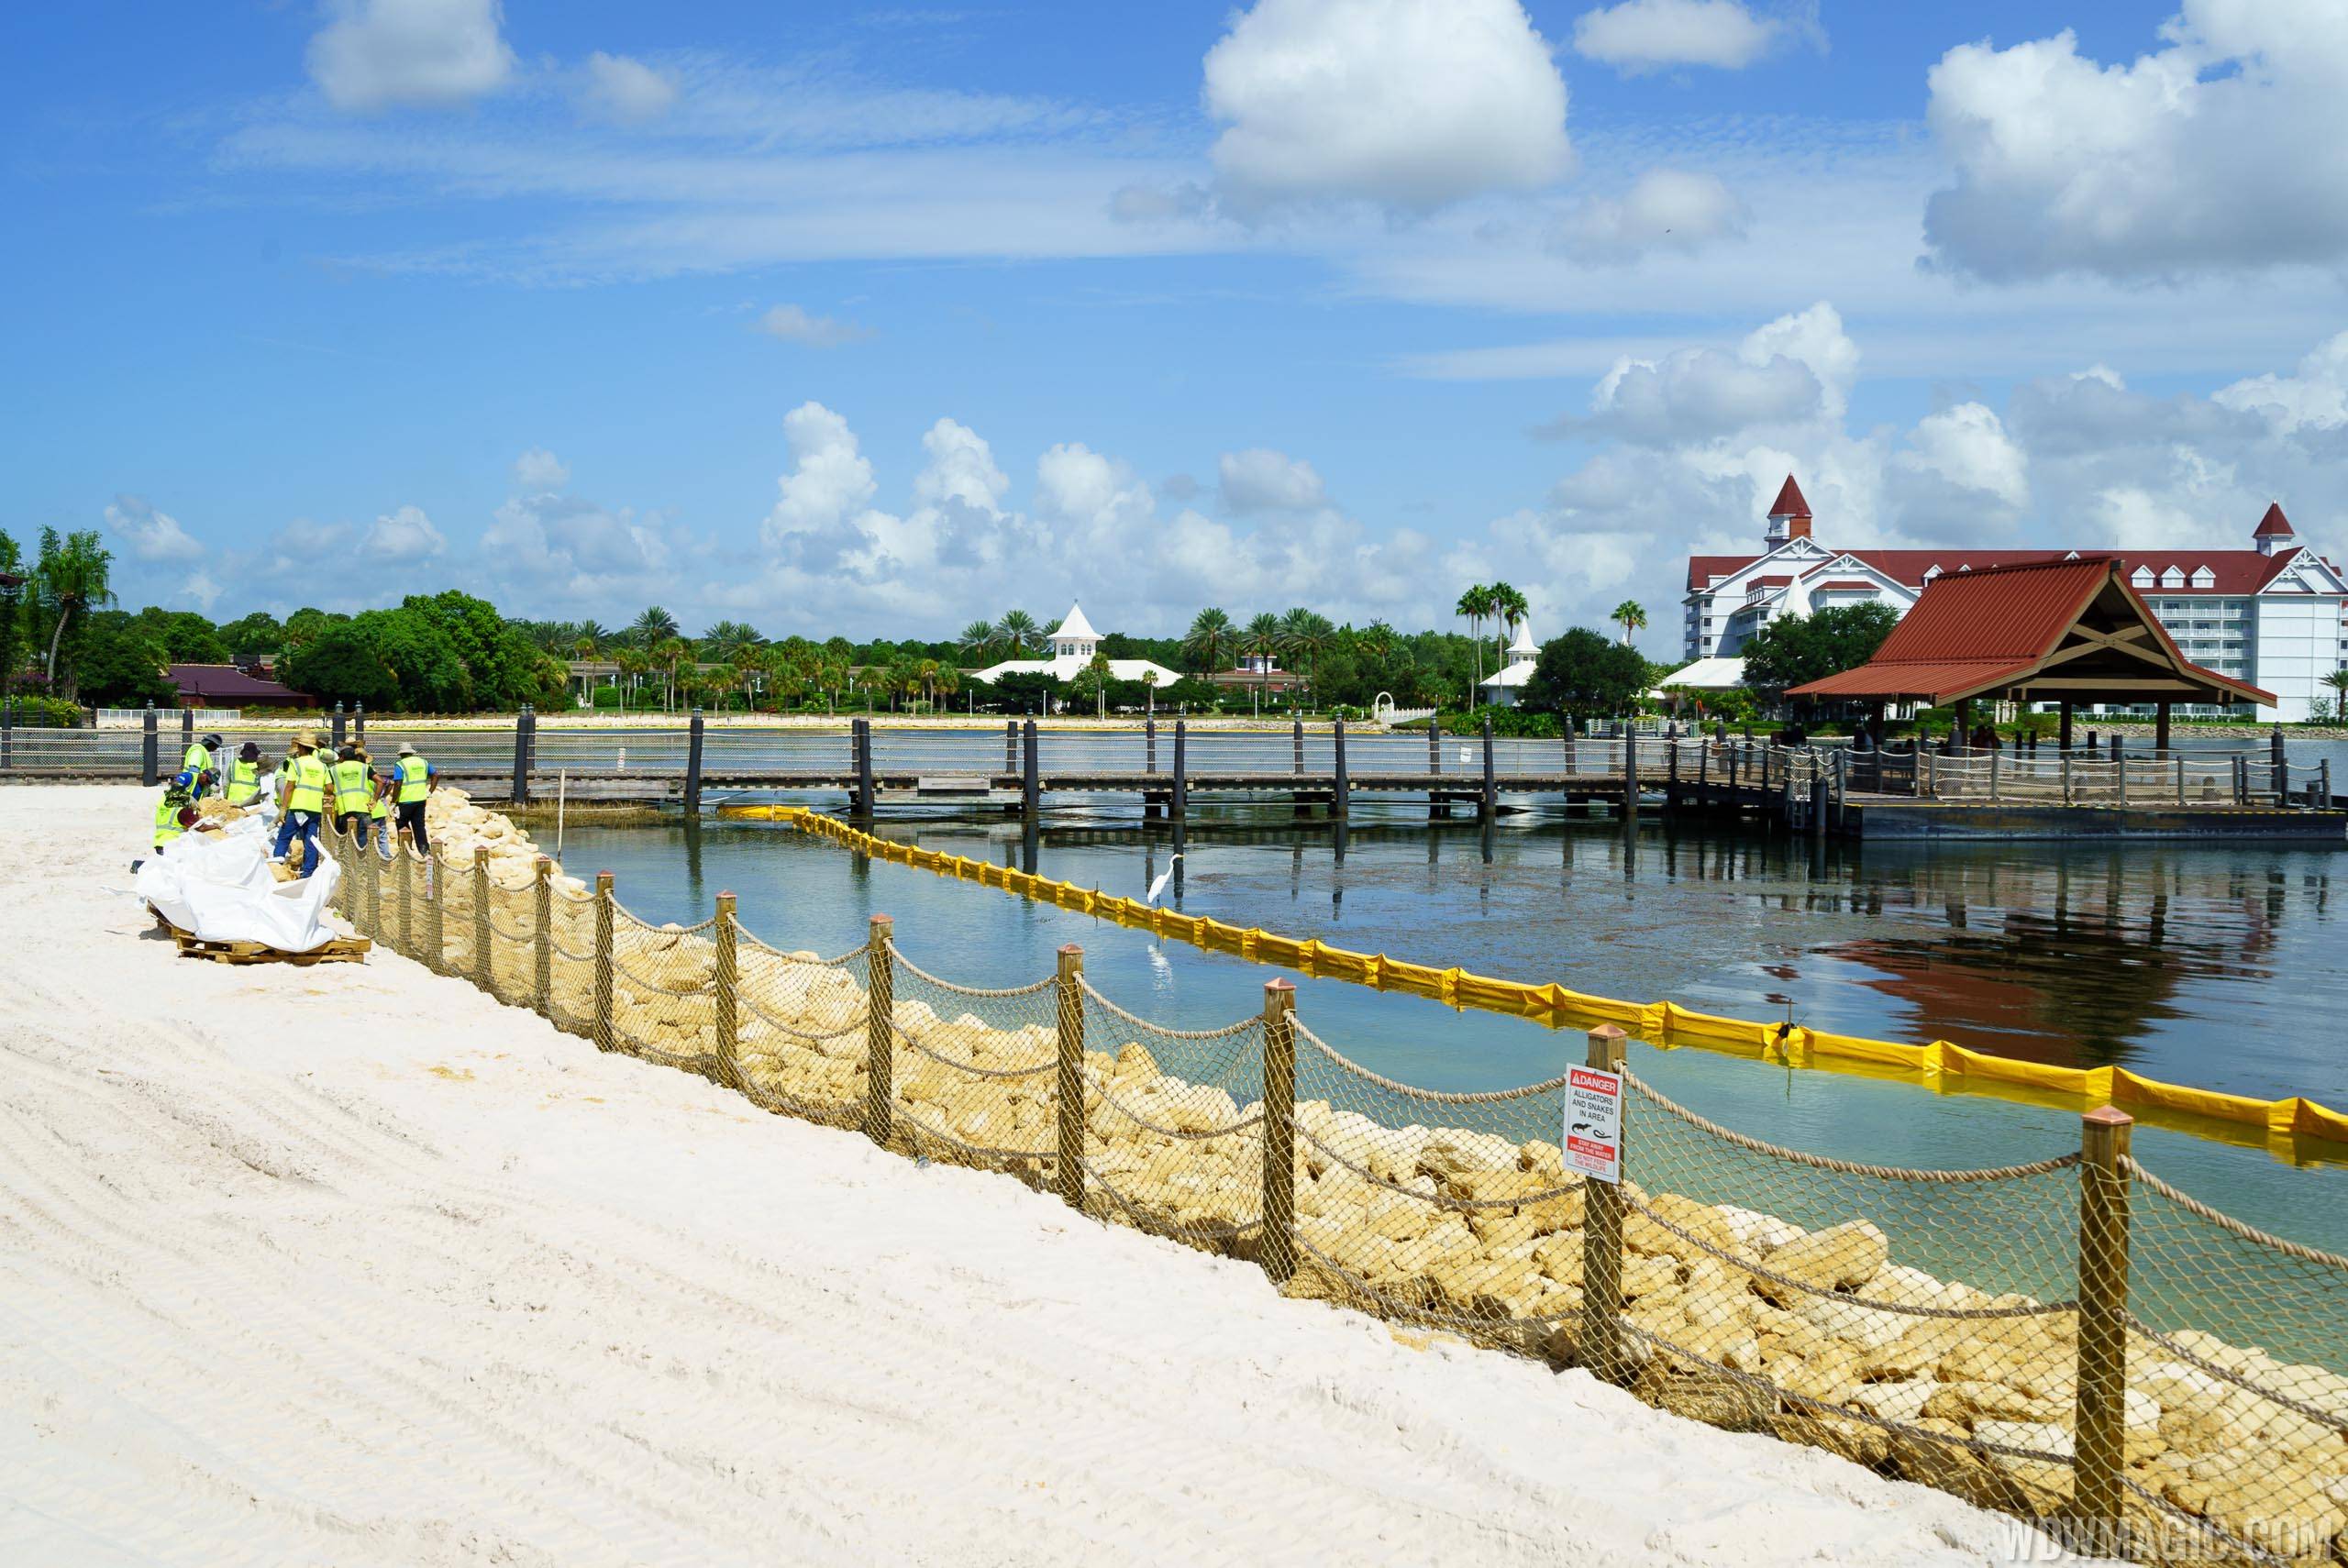 PHOTOS - Seven Seas Lagoon barrier taking shape at Disney's Polynesian Village Resort